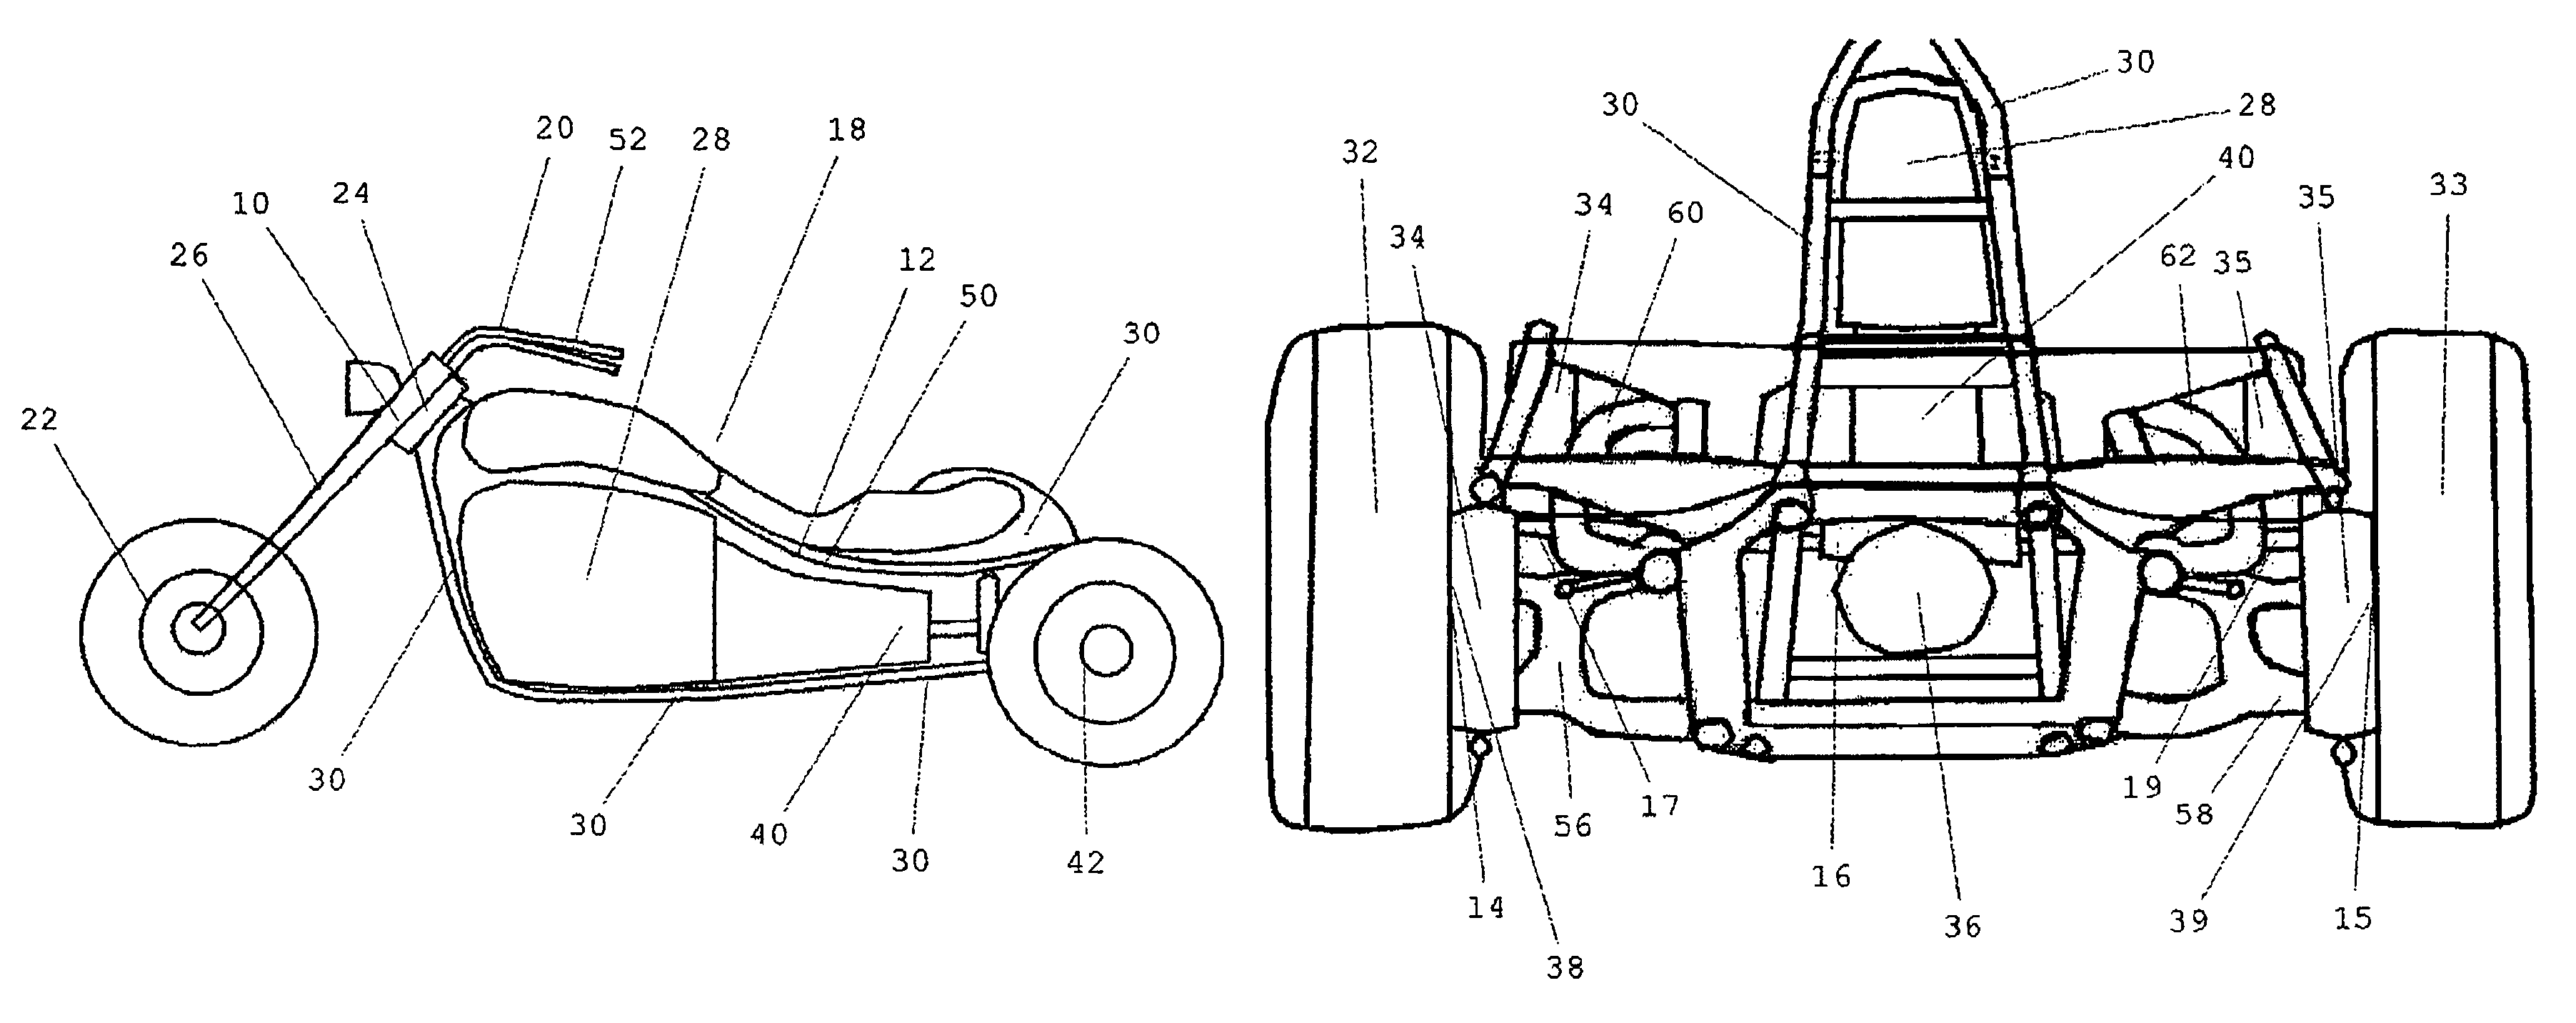 Motorized three-wheeled vehicle rear steering mechanism